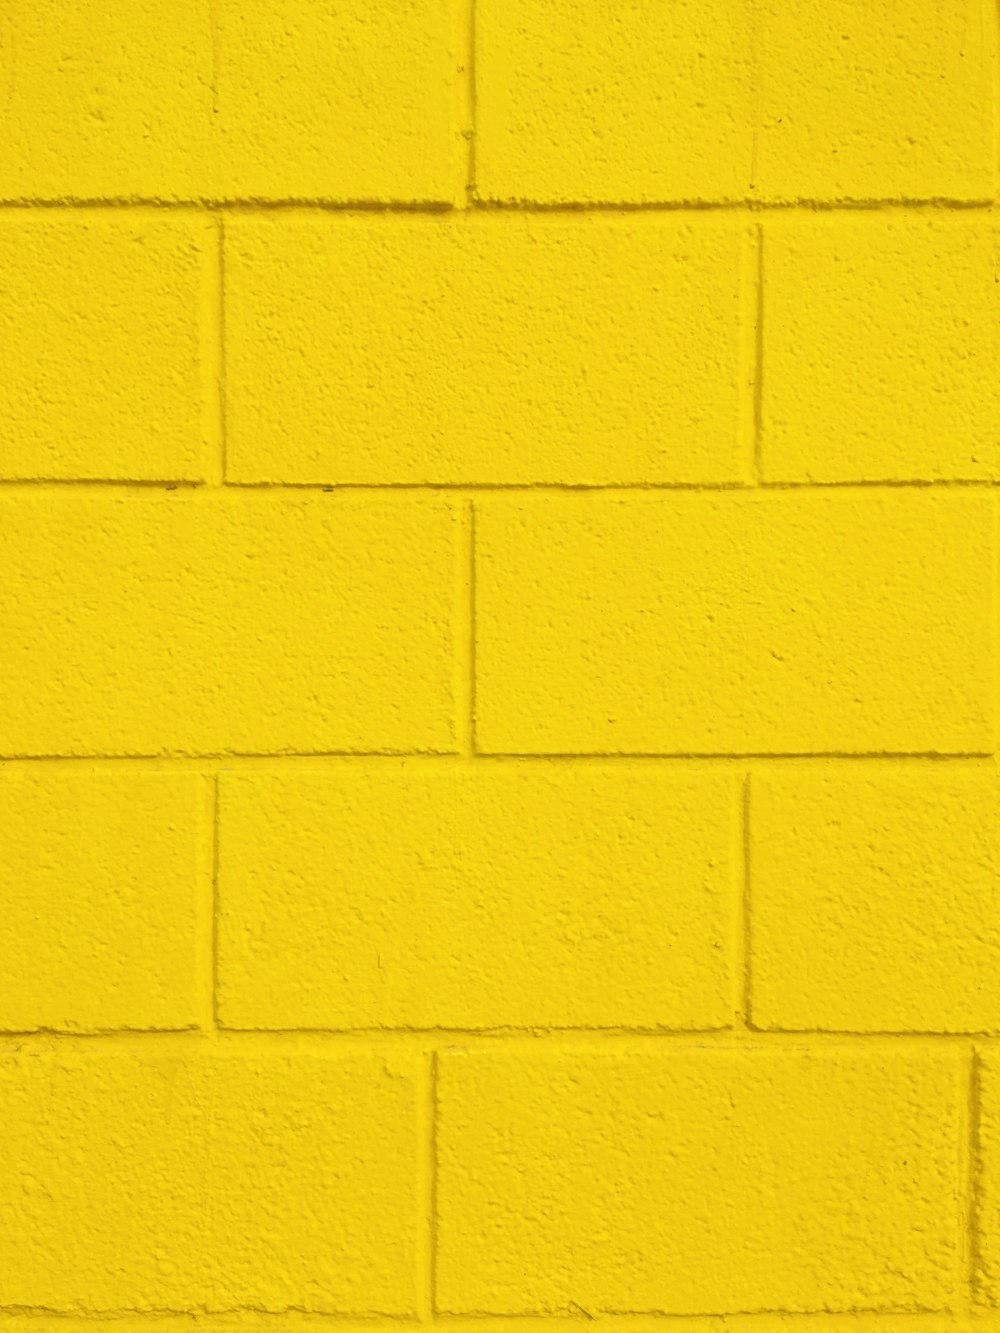 mur peint en jaune avec de la peinture jaune